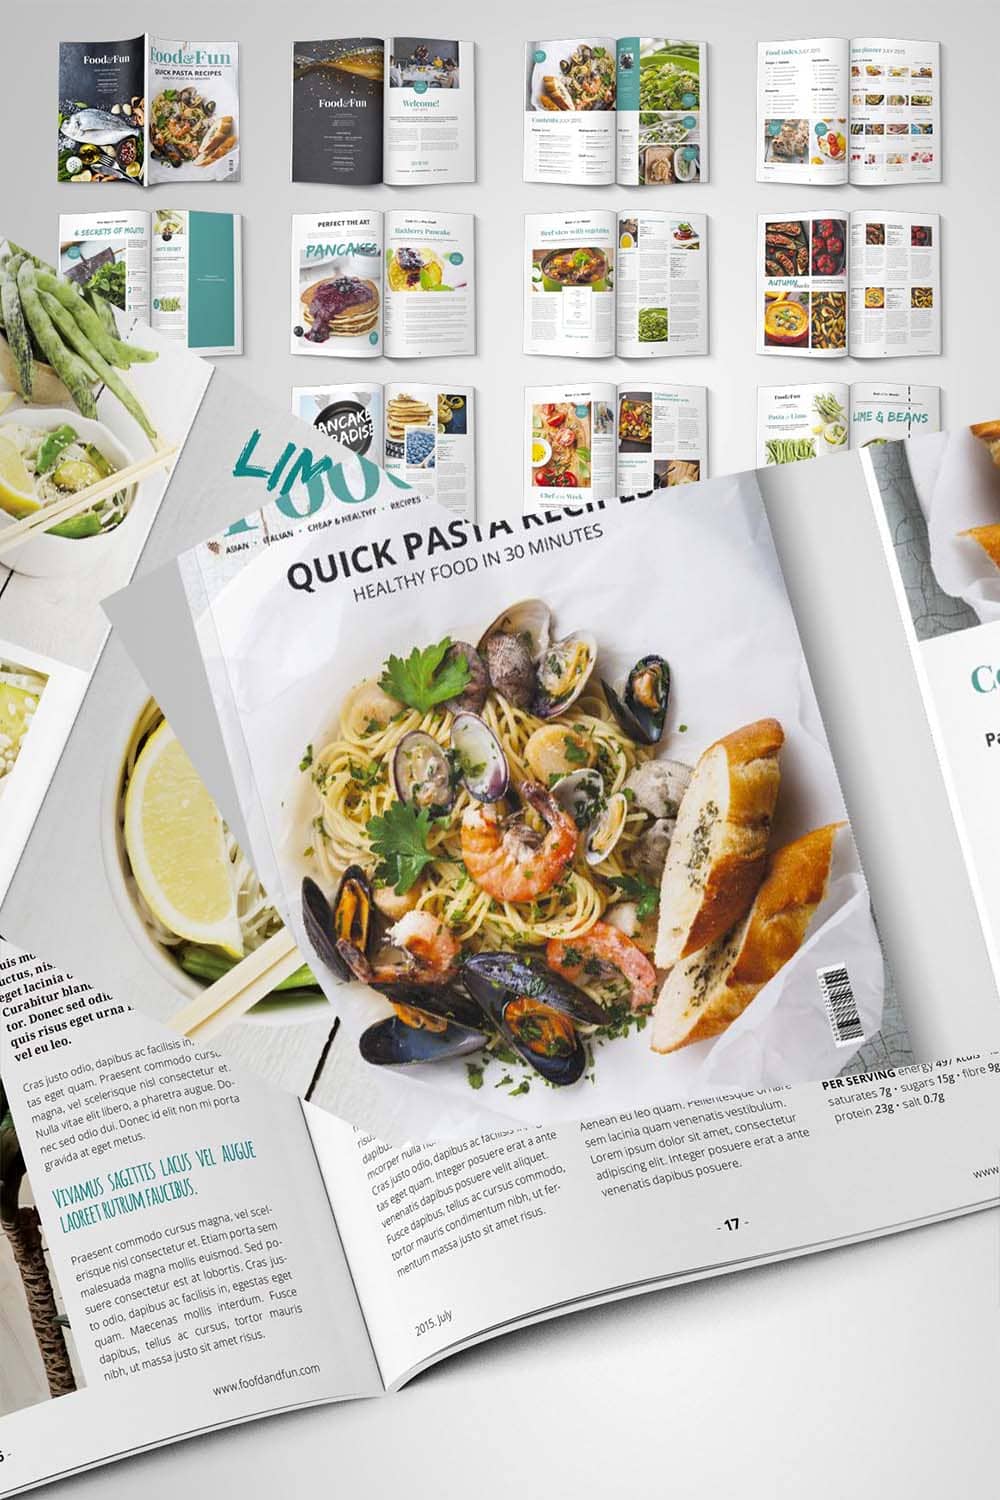 foodfun magazine indesign template pinterest image.